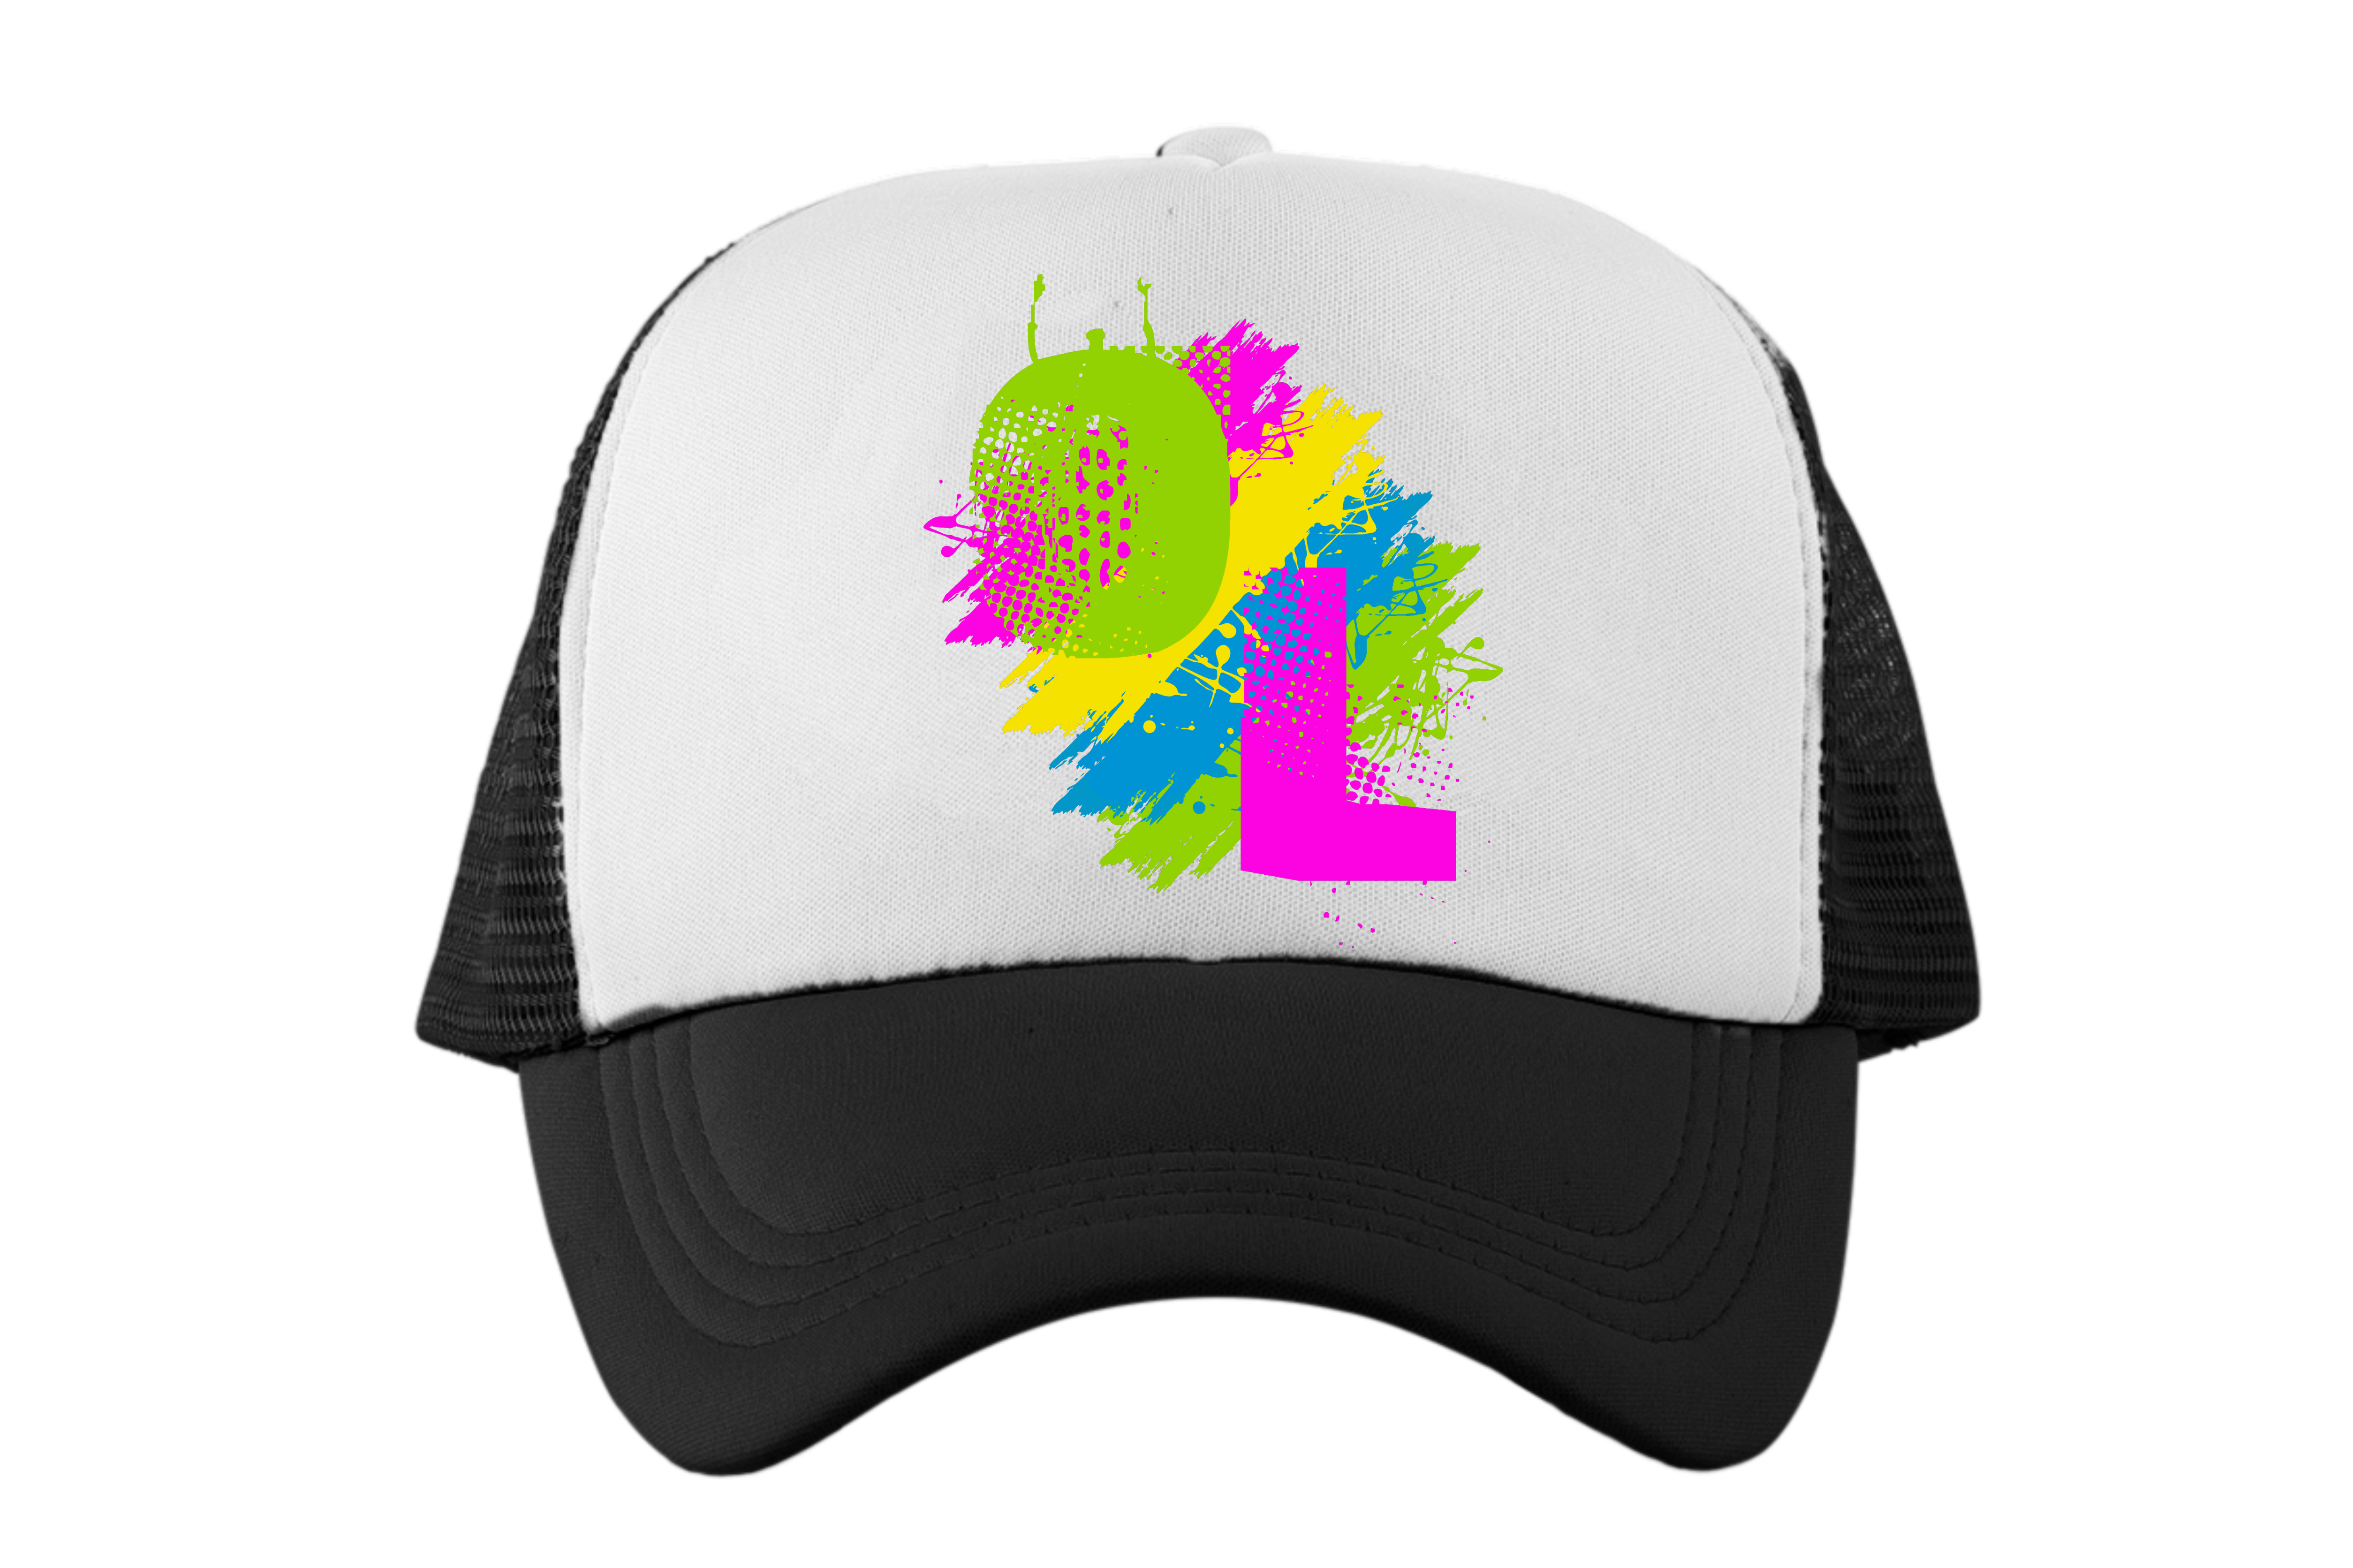 Organik Lyfestyle - OL Paint Hat